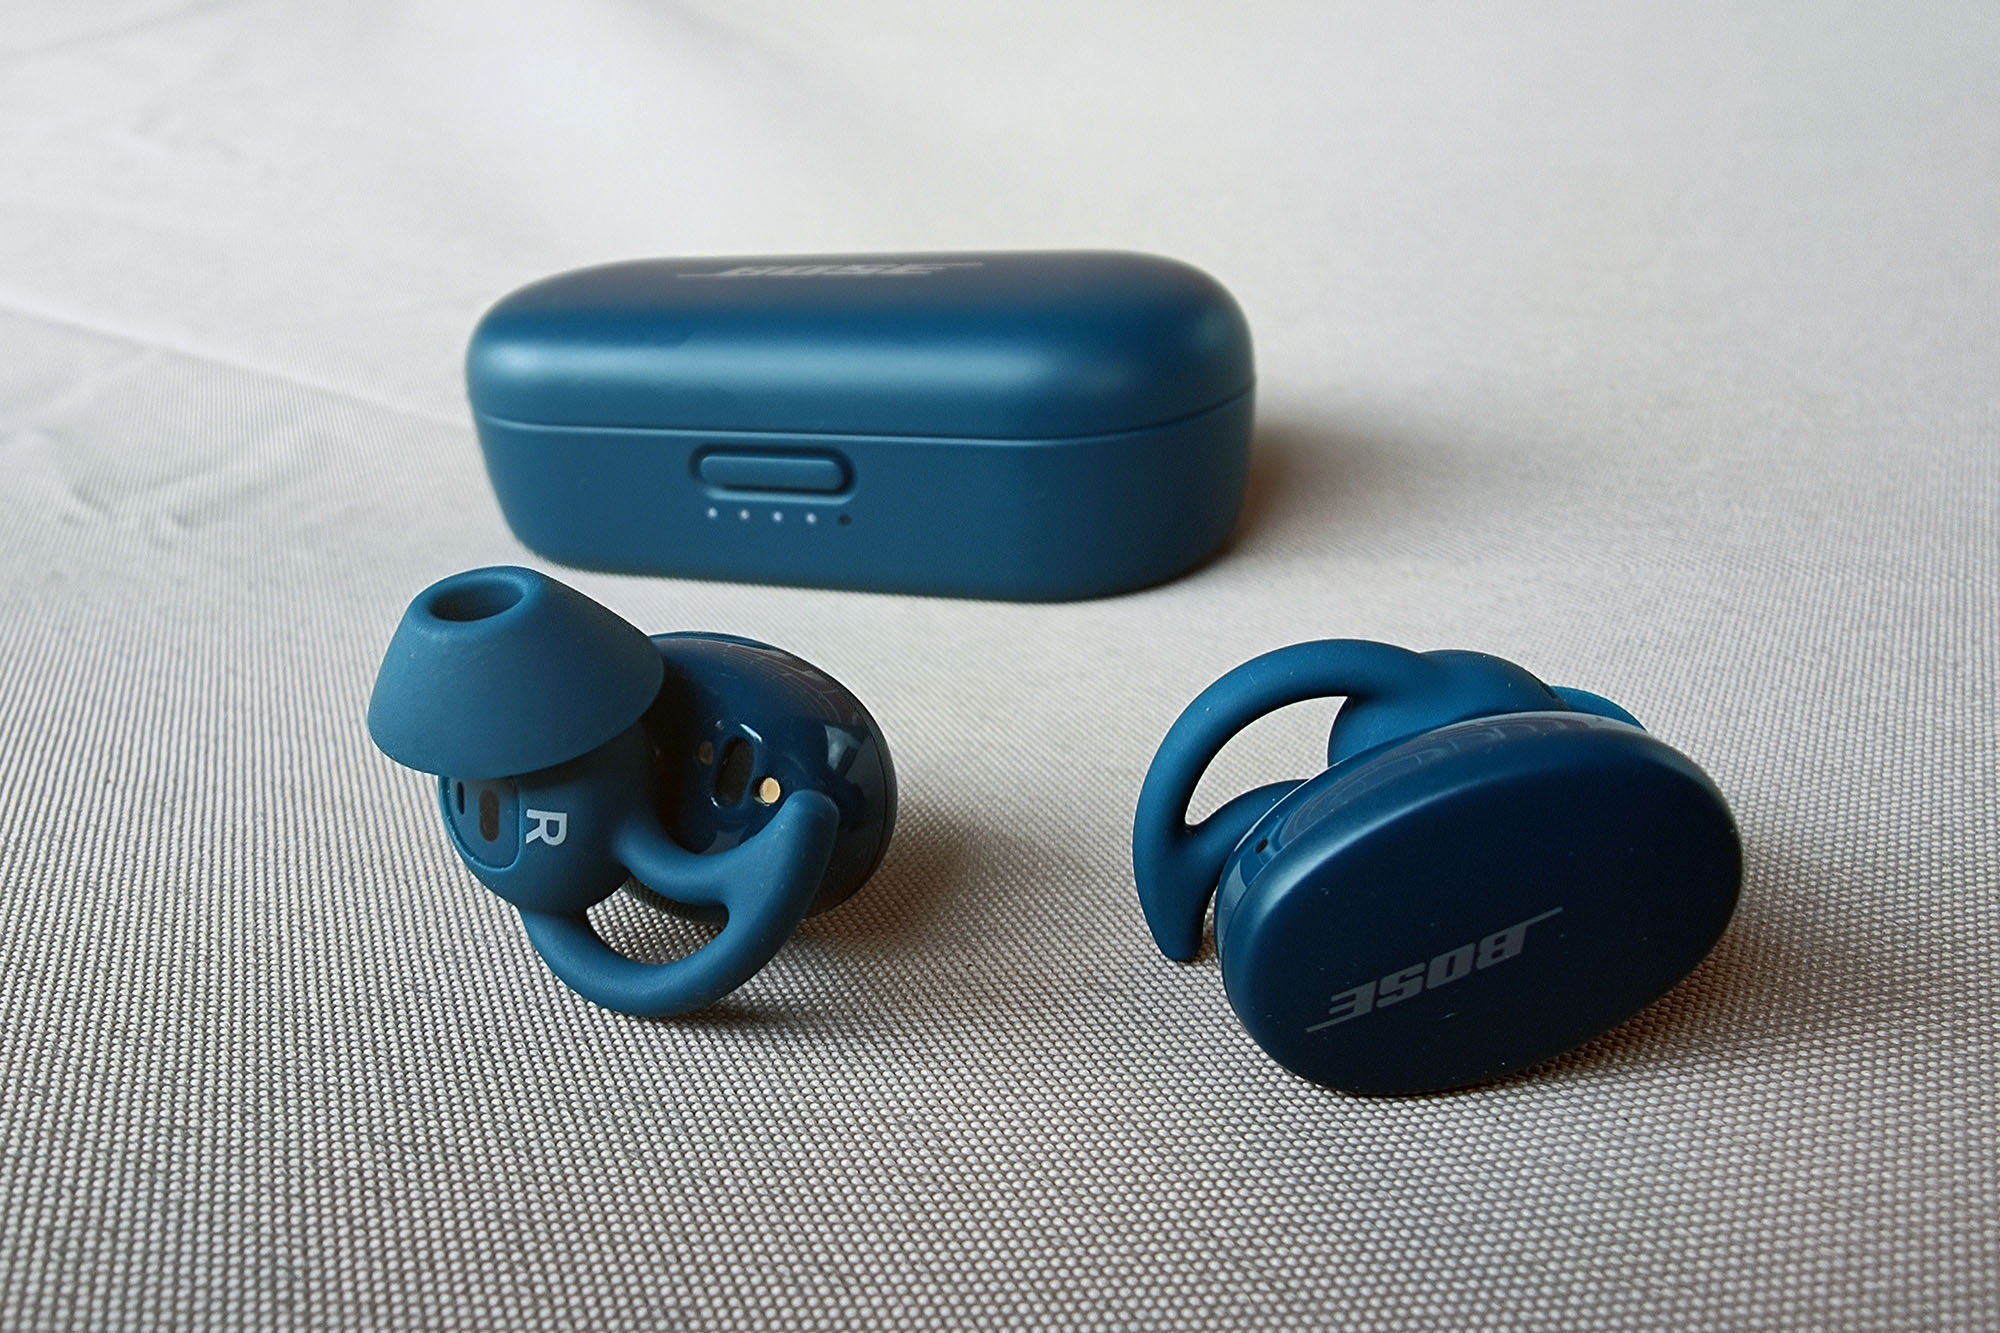 Bose sport earbuds